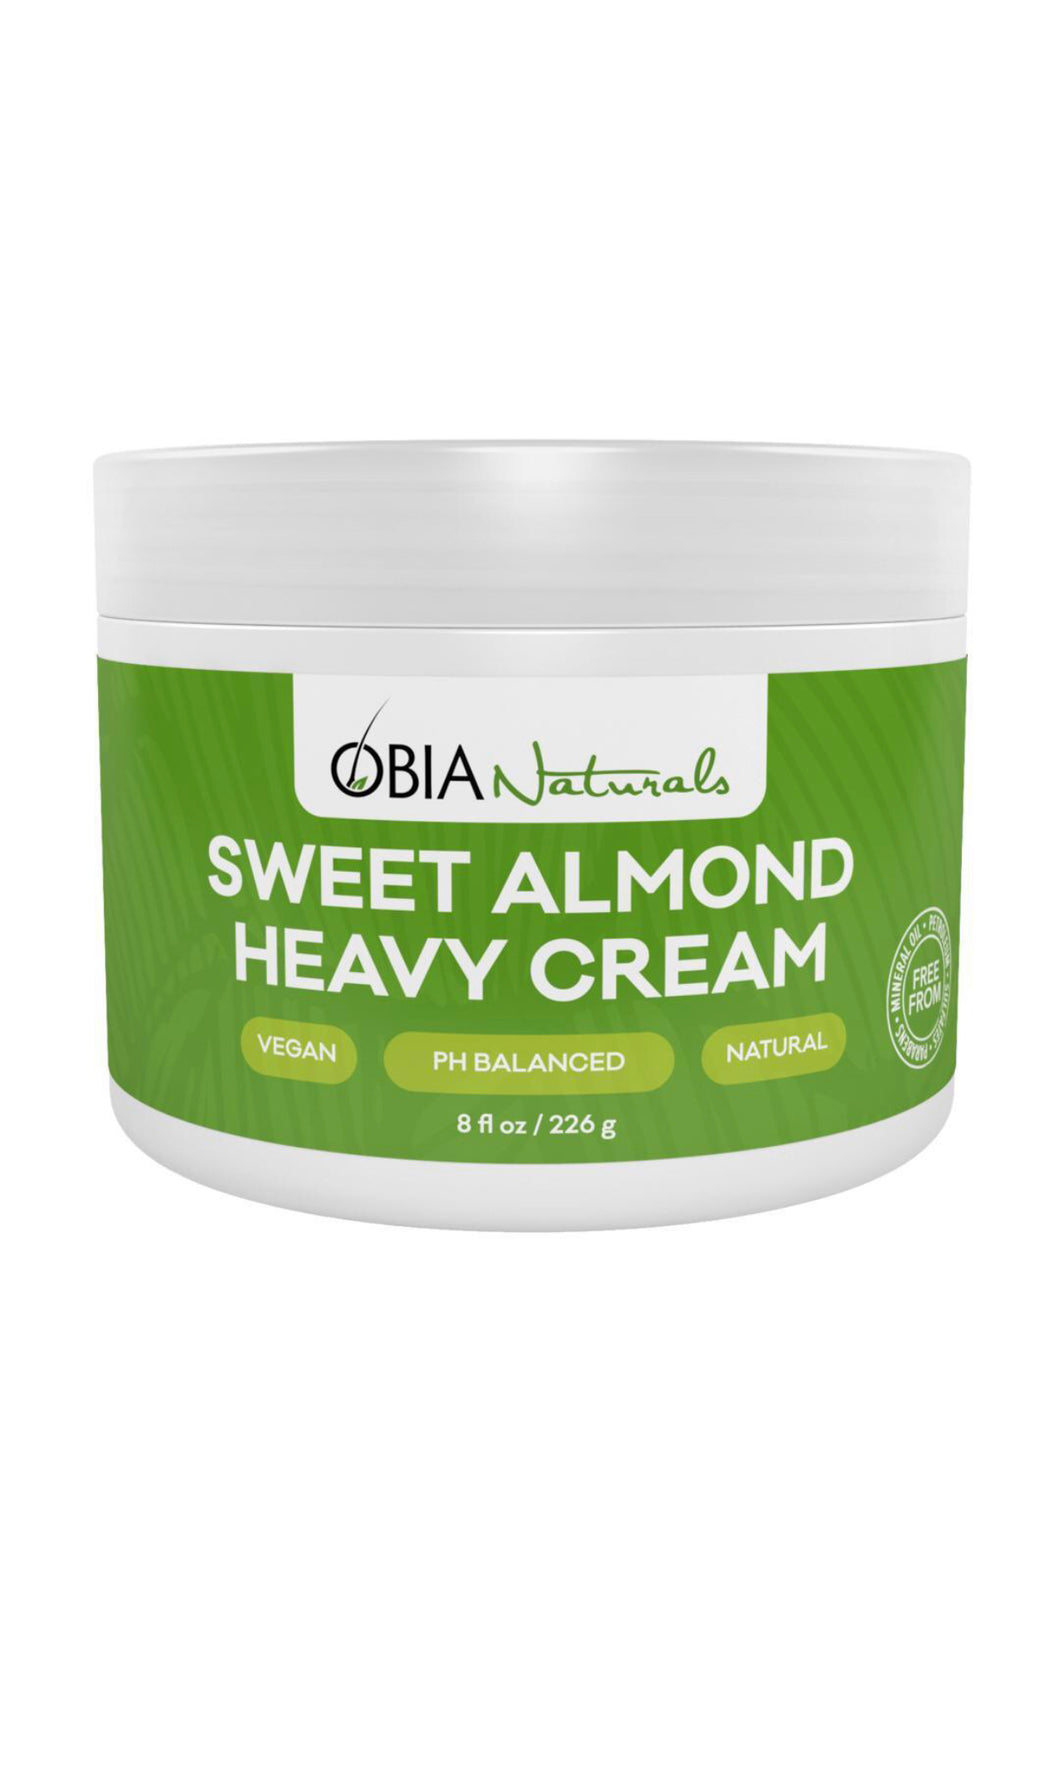 OBIA Naturals Sweet Almond Heavy Cream 12 oz